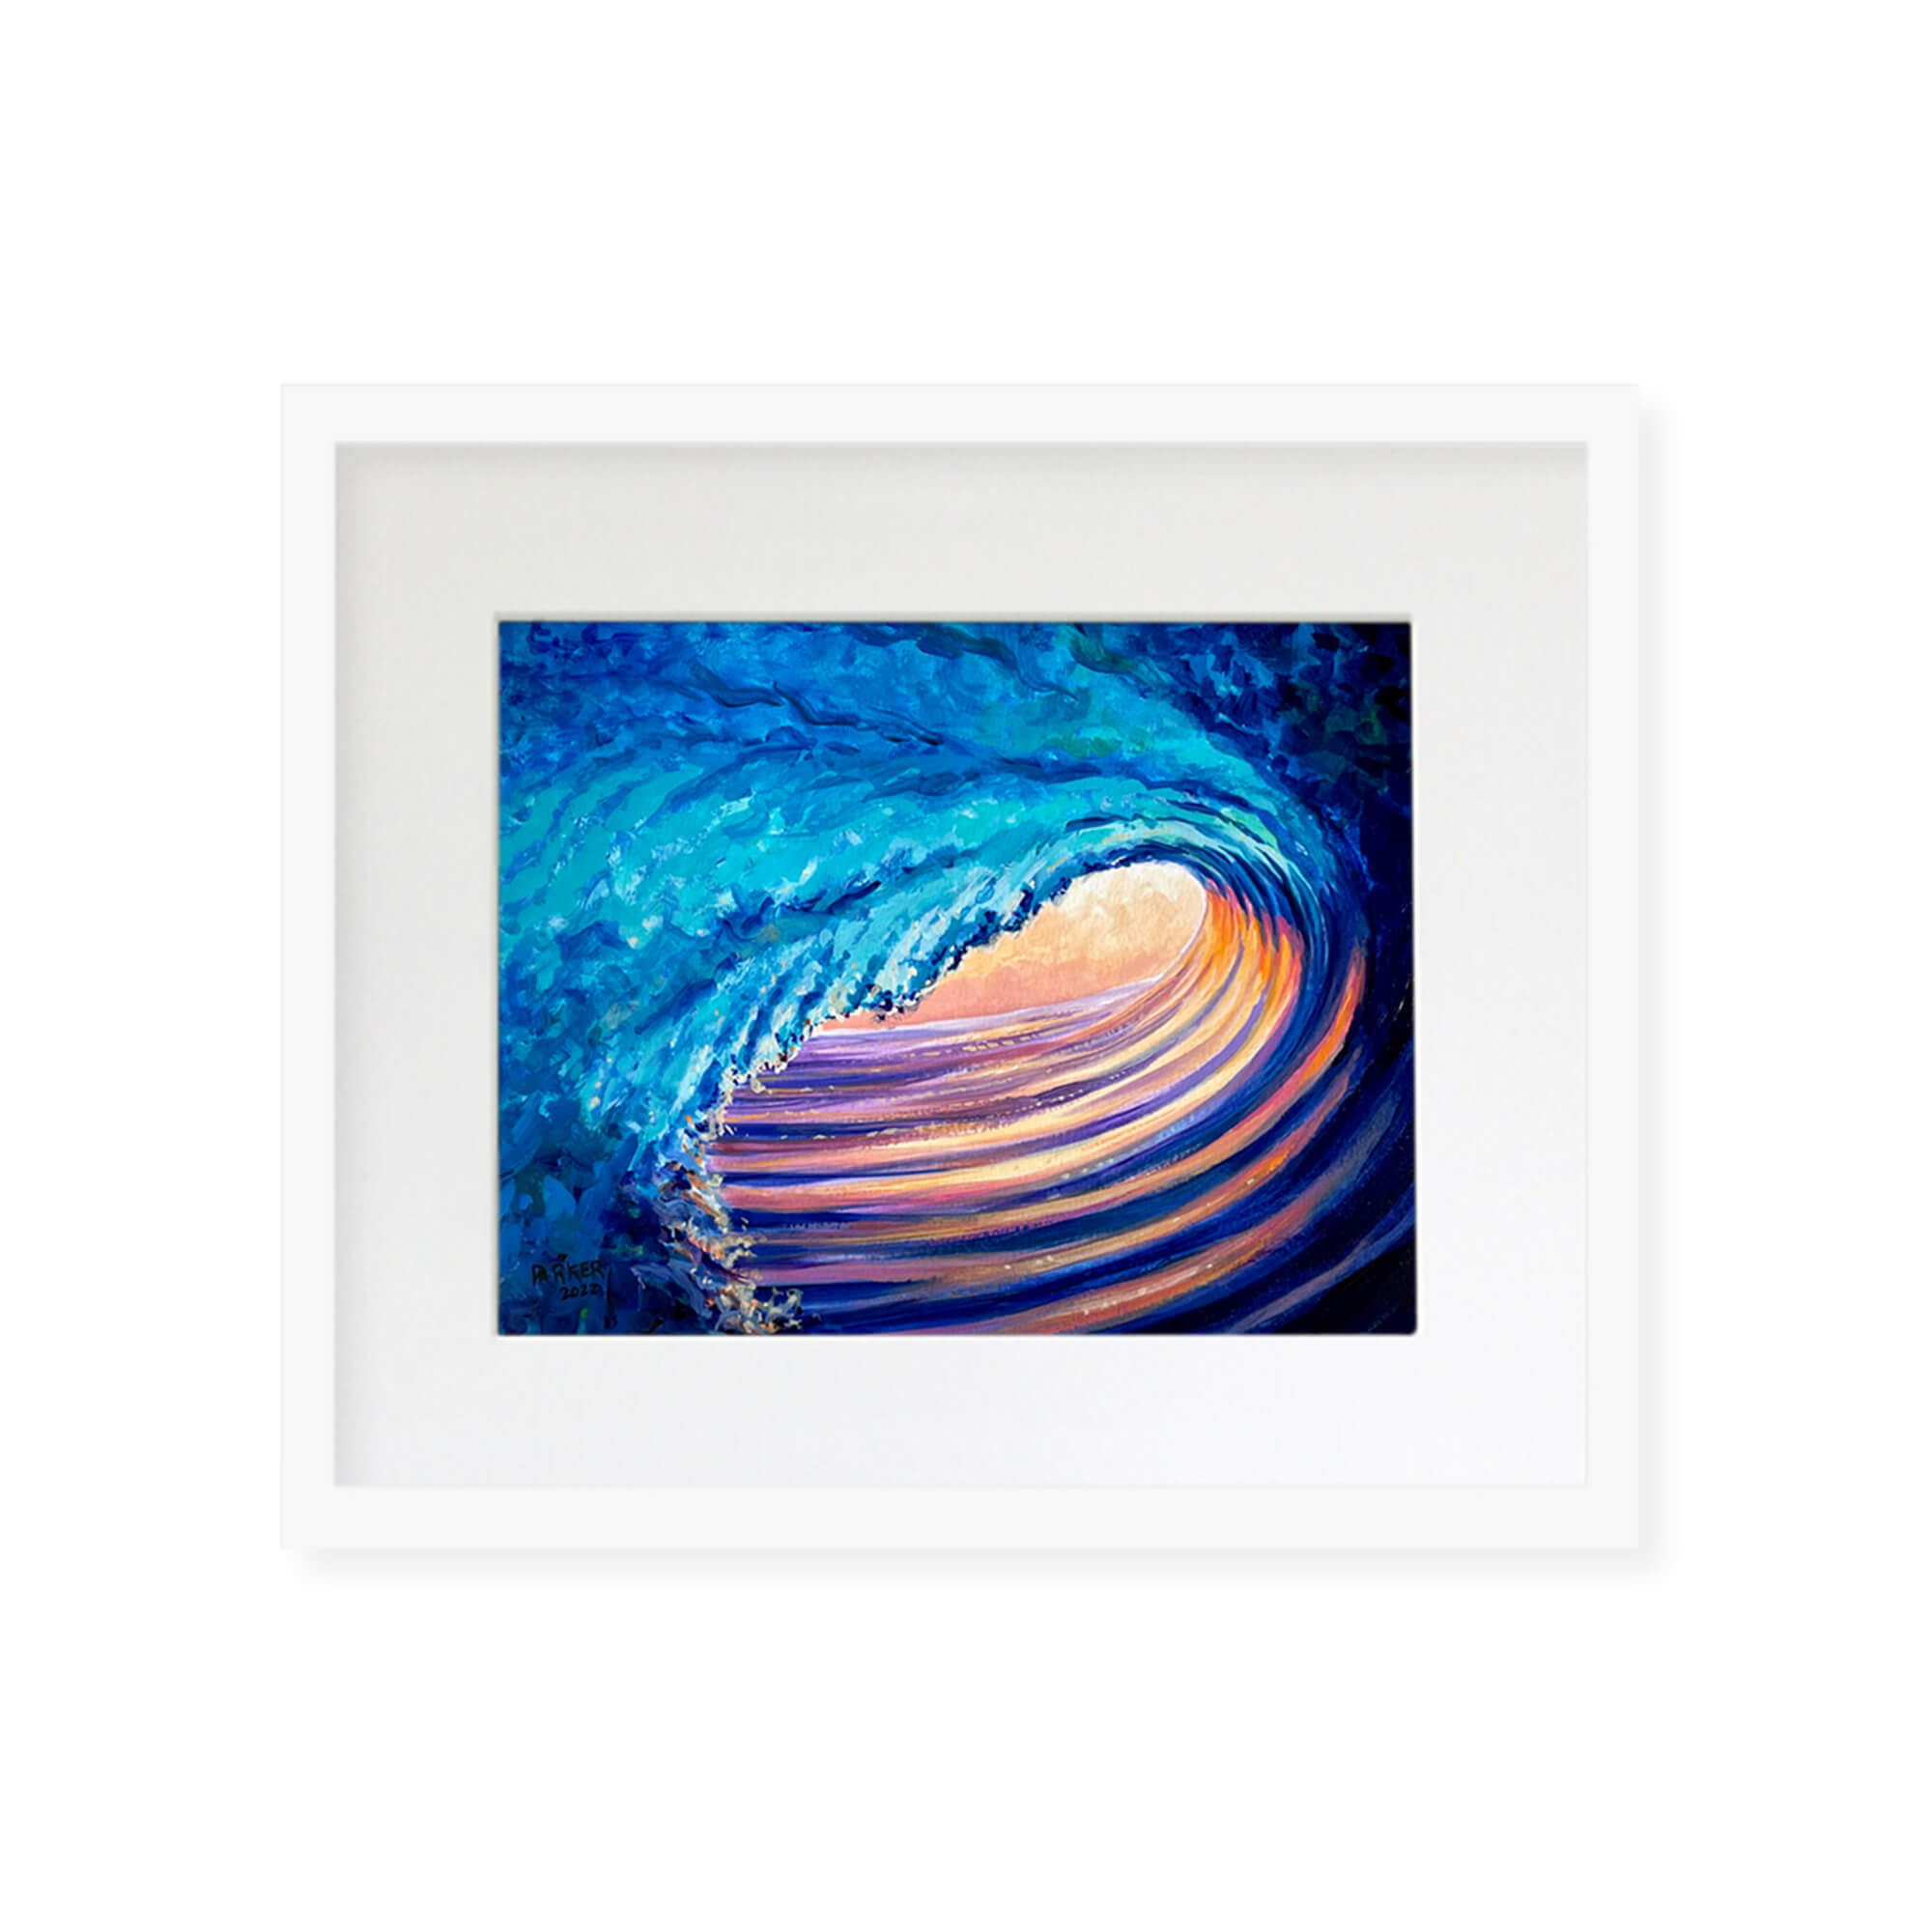 Multi colored wave barrel by Hawaii artist Patrick Parker